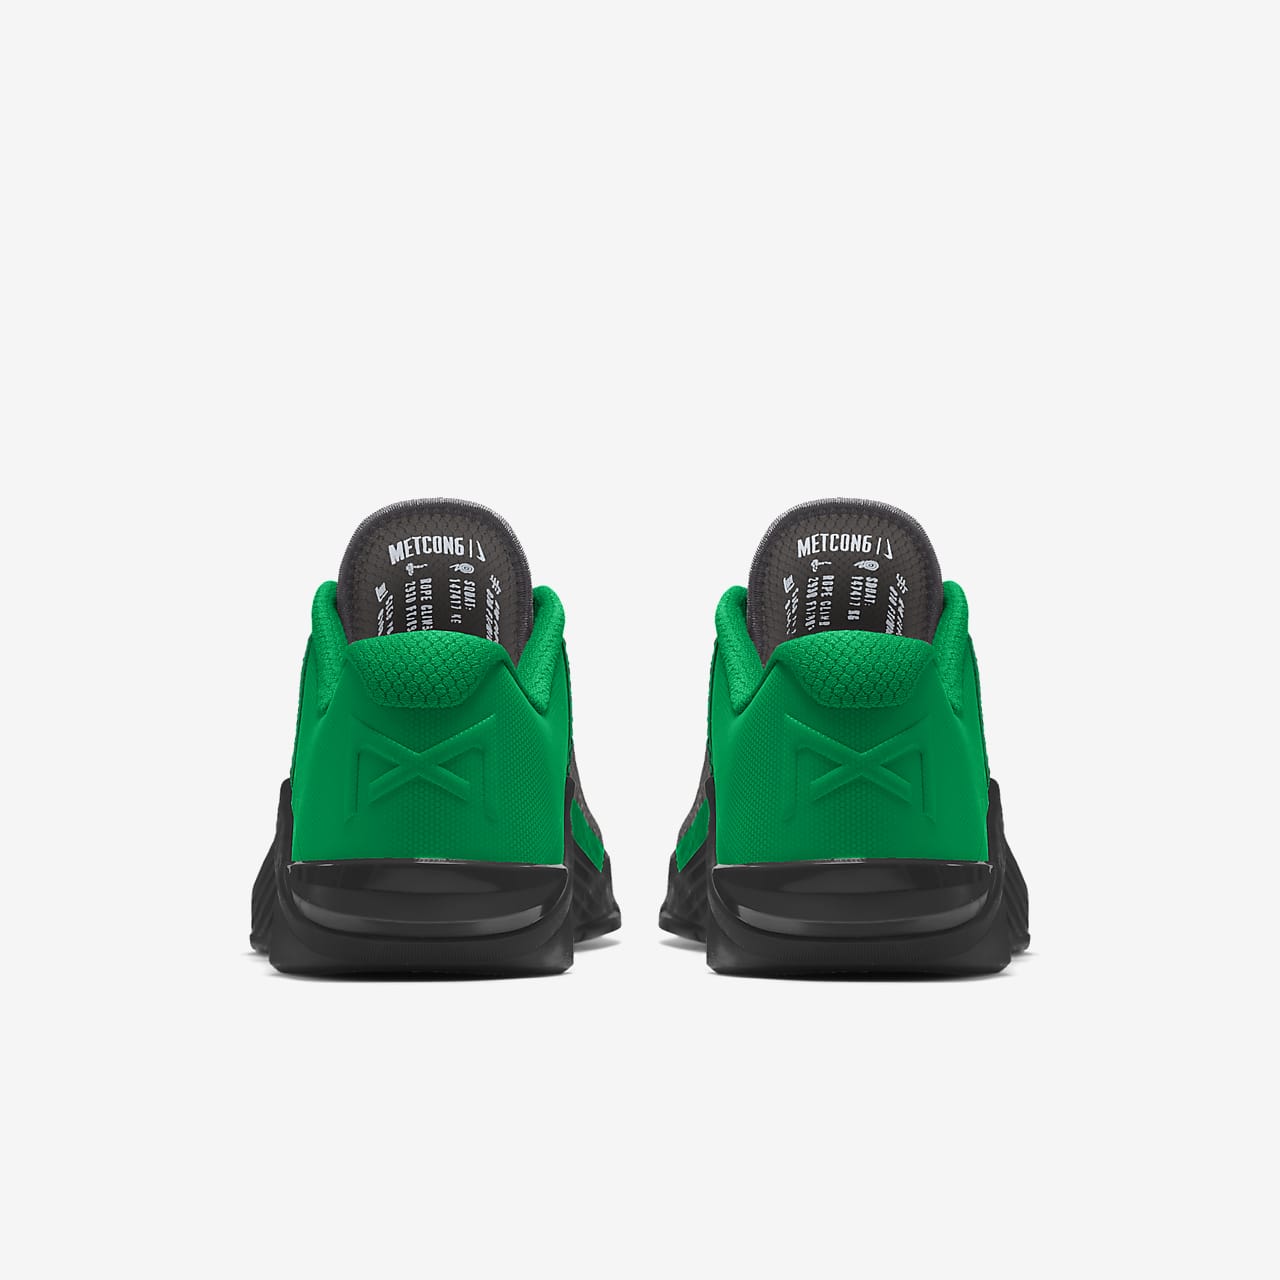 Custom Training Shoe. Nike LU